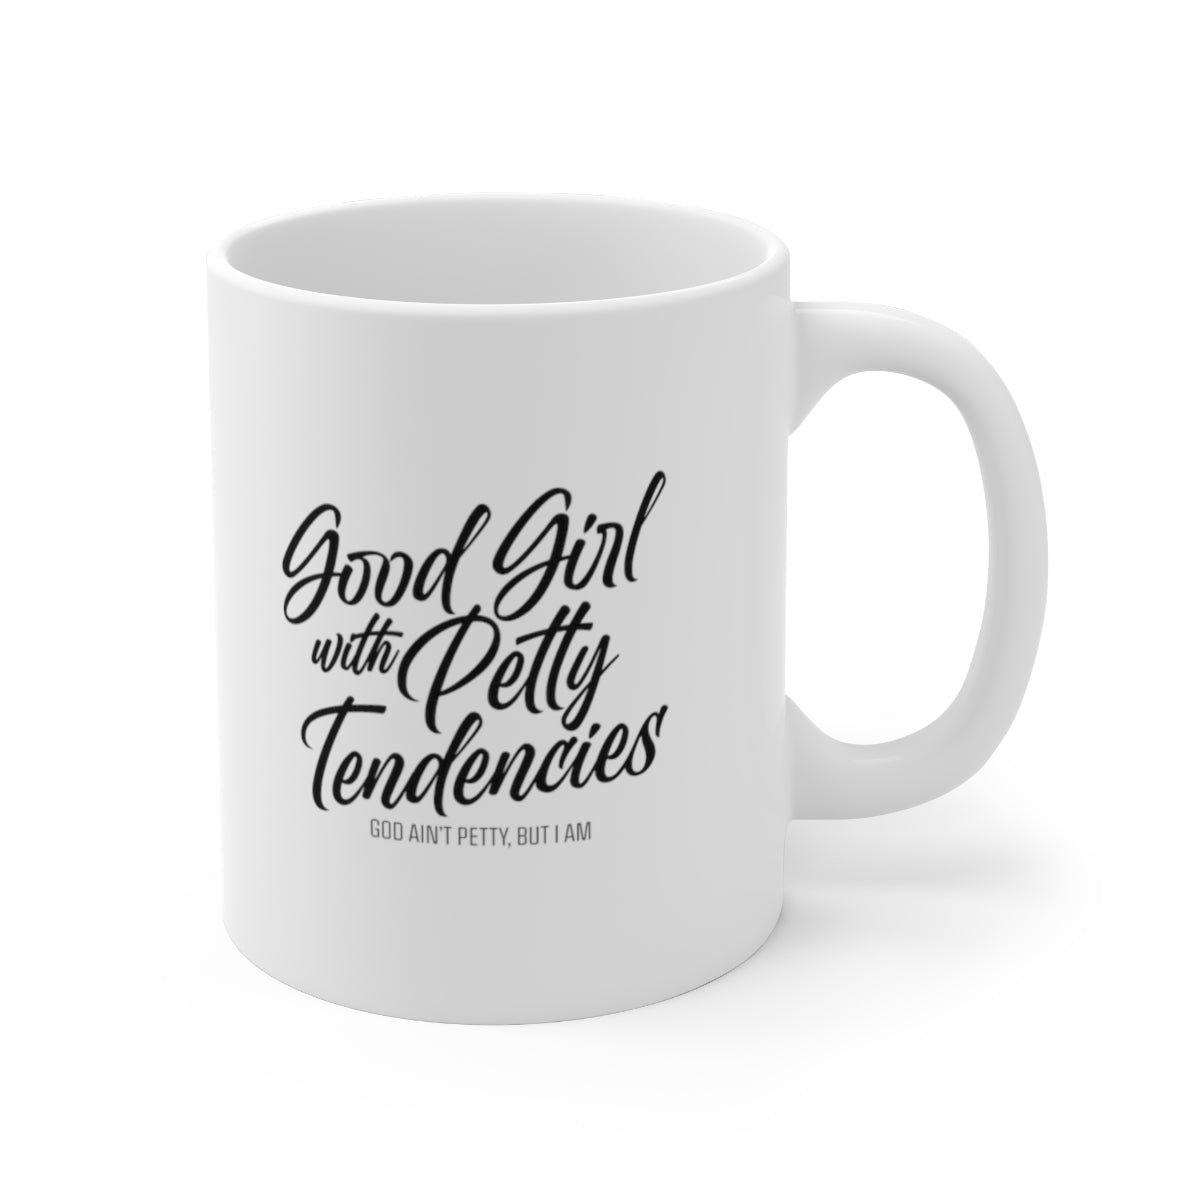 Good Girl with Petty Tendencies Mug 11oz (White/Black)-Mug-The Original God Ain't Petty But I Am